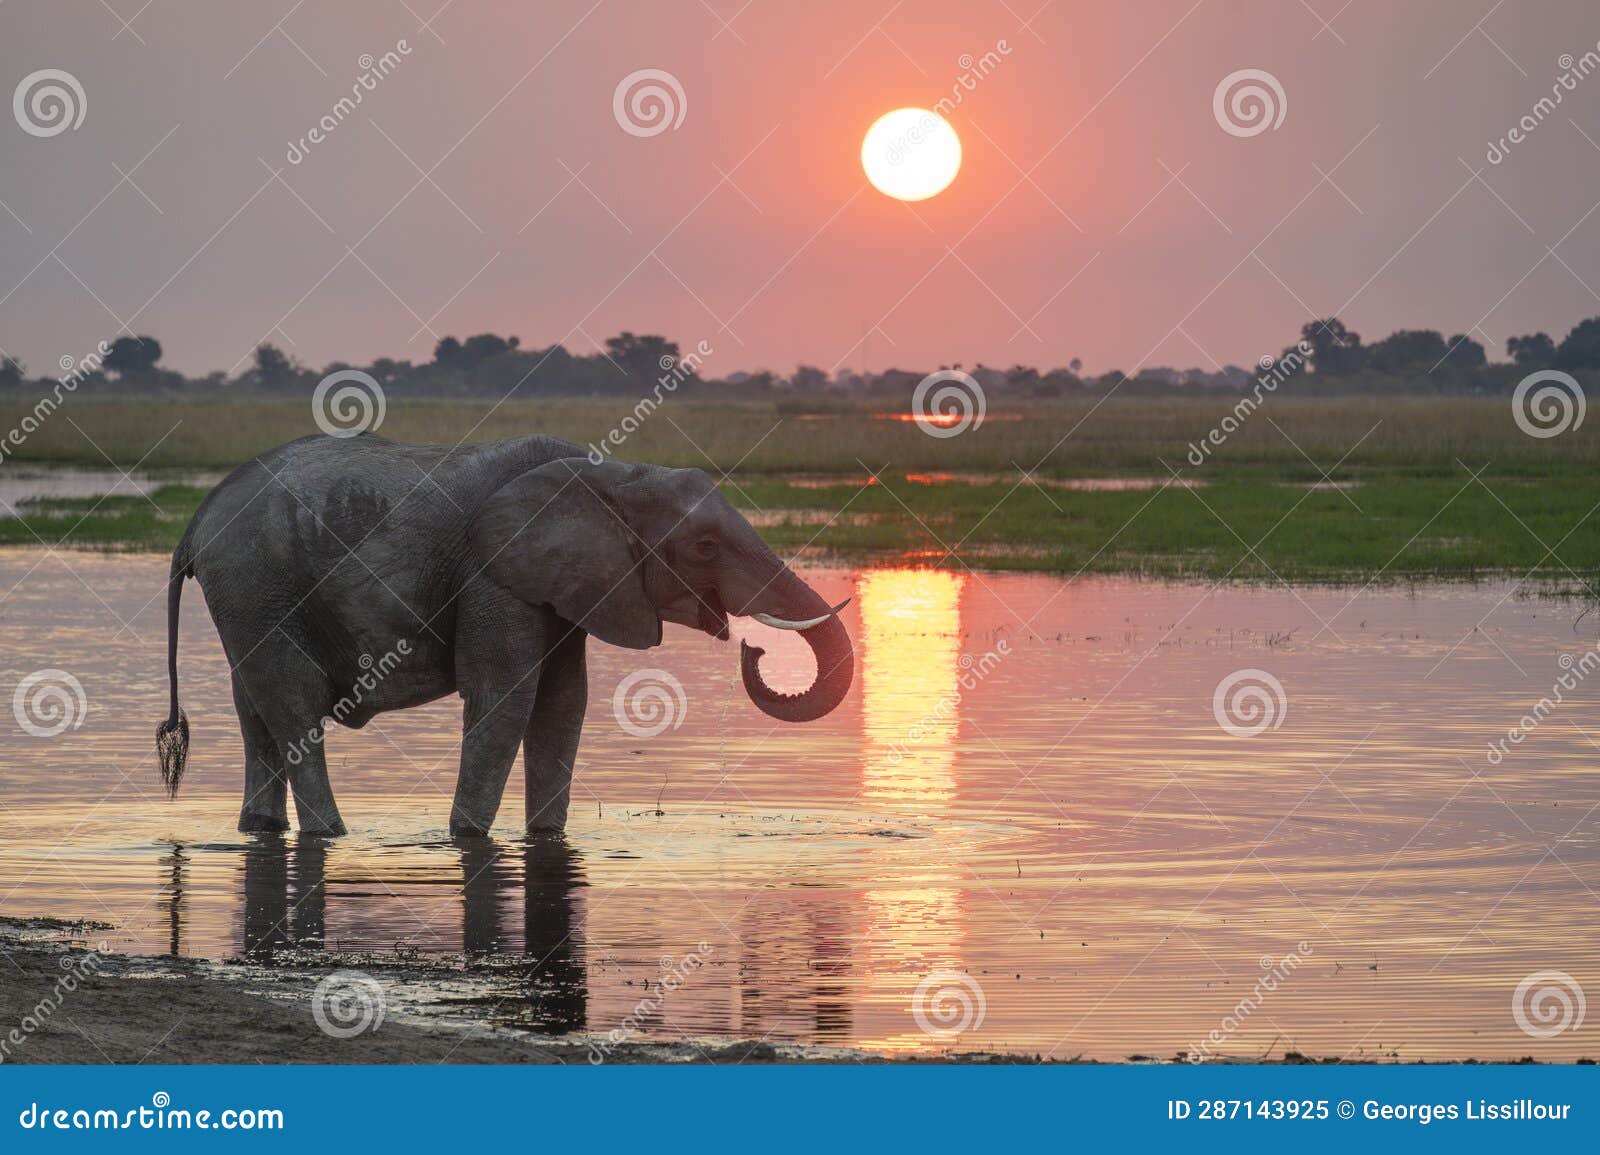 elephant in sunset chobe river